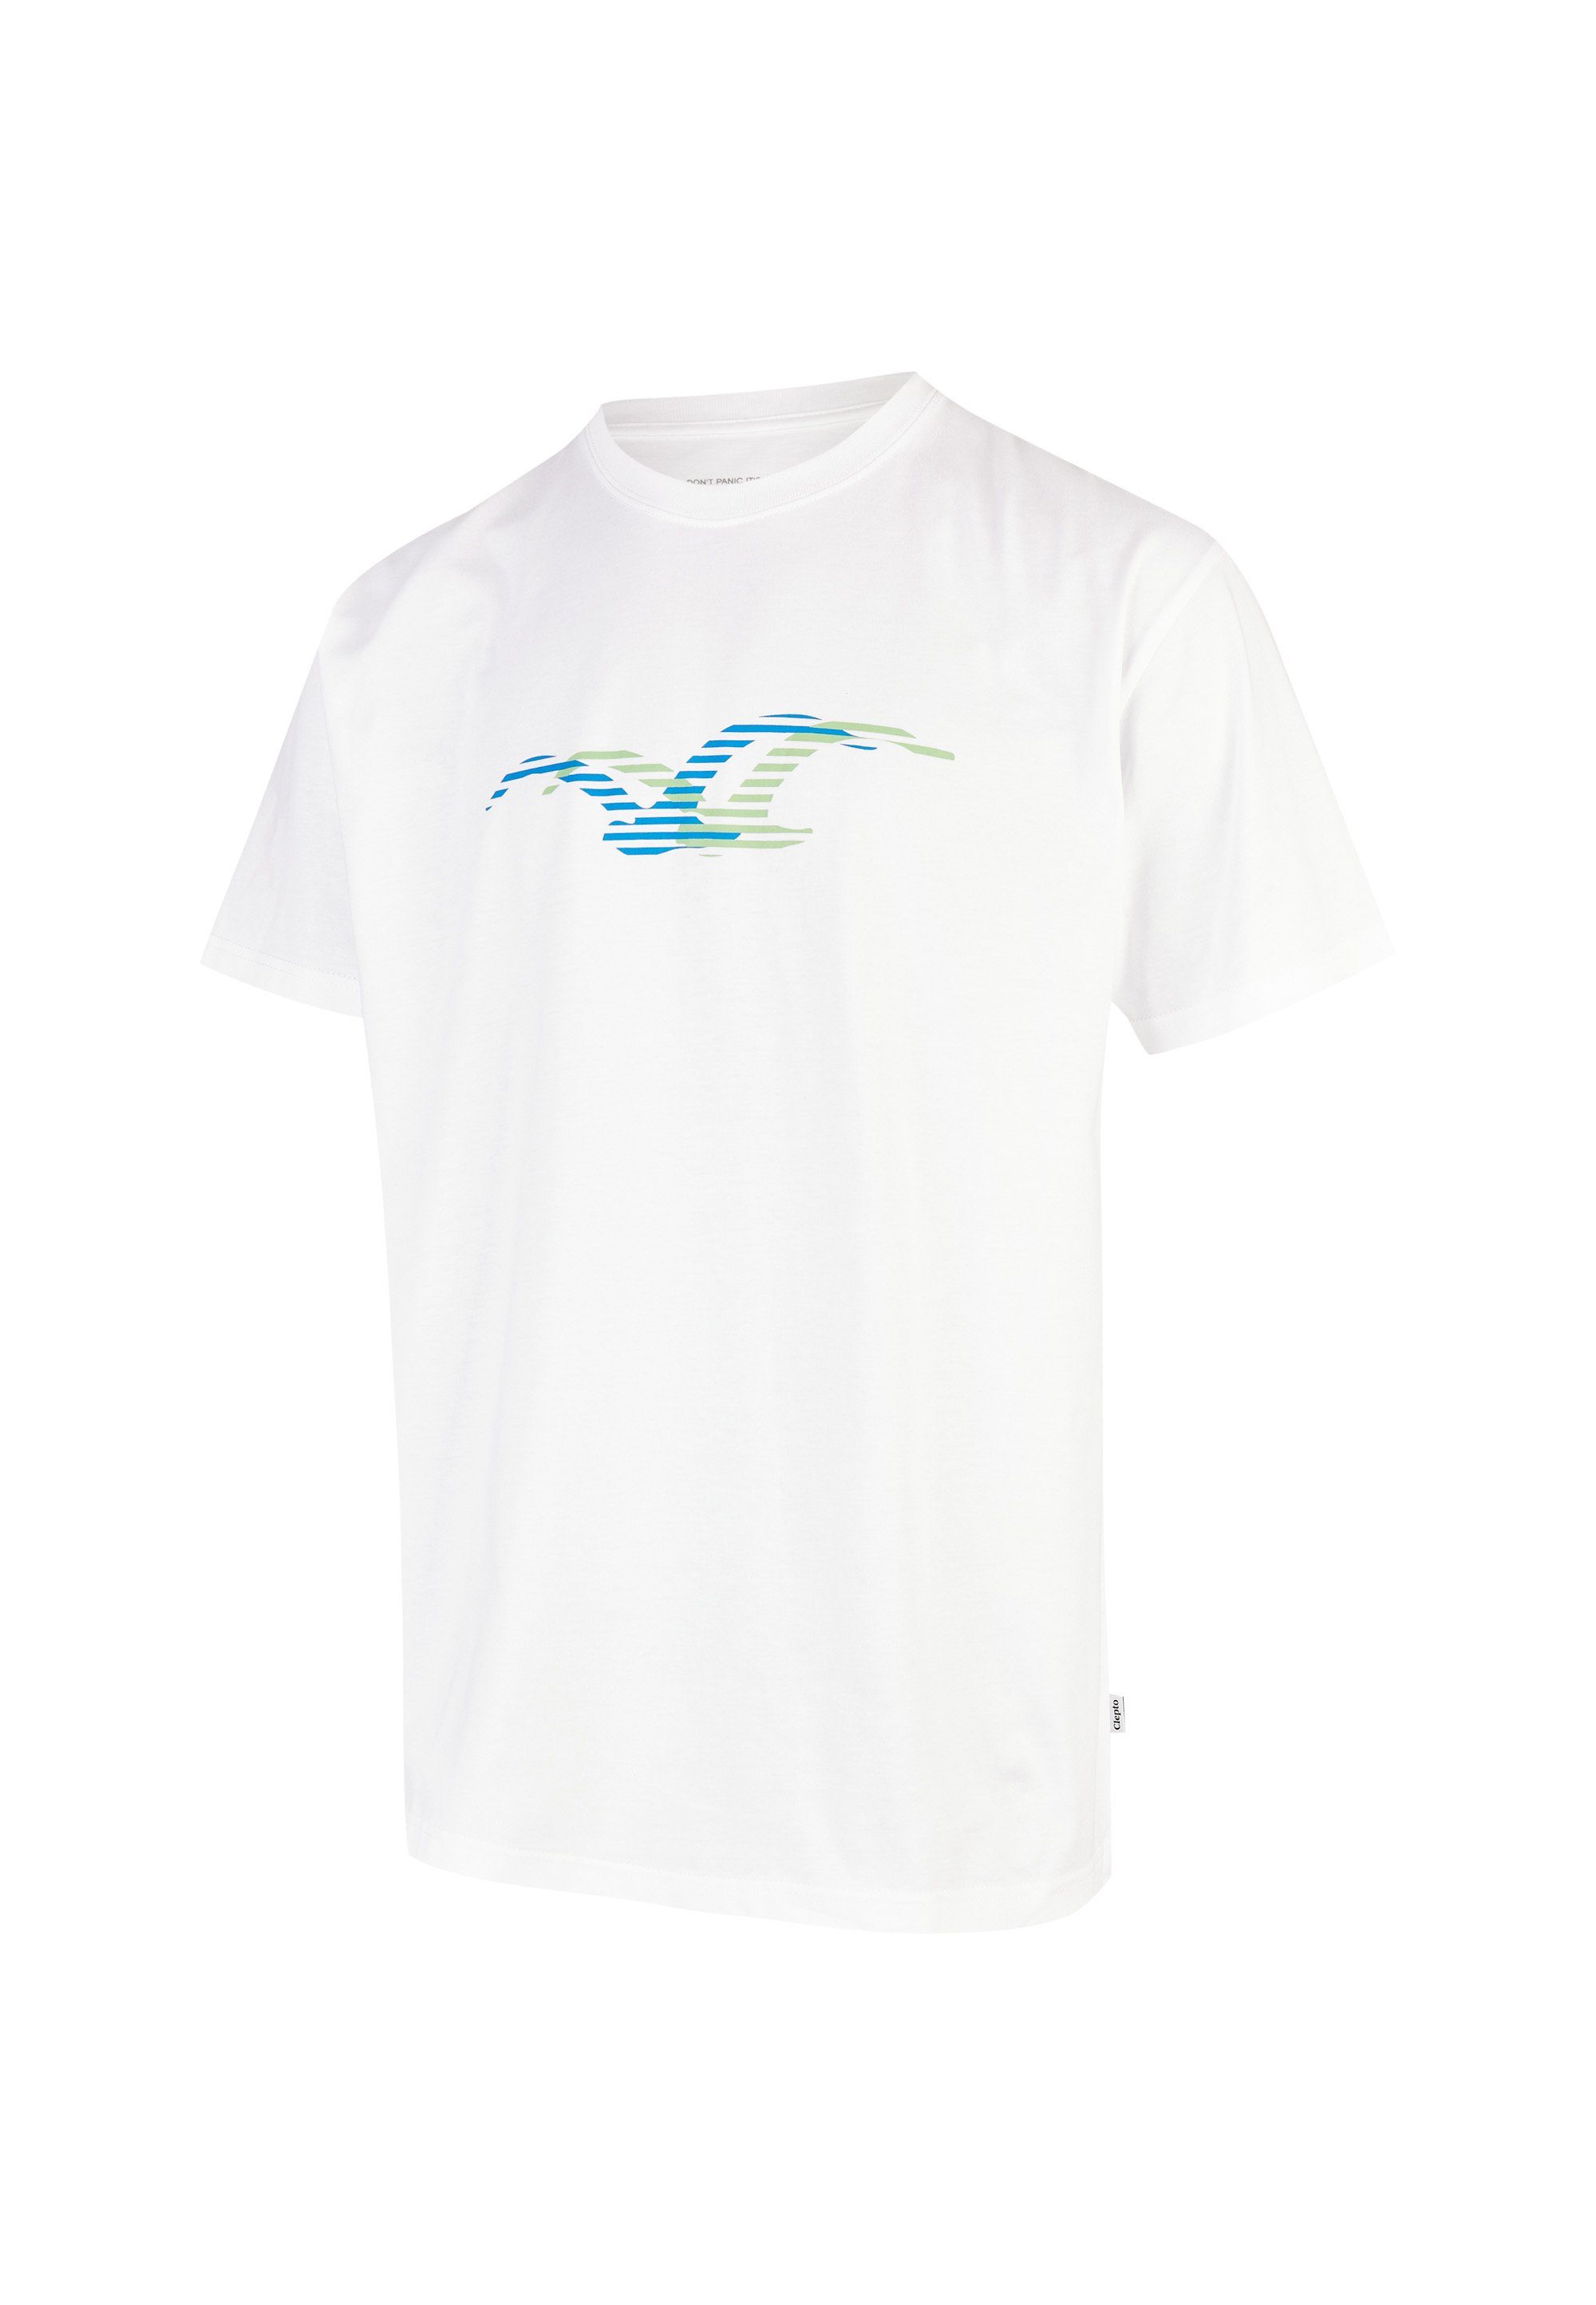 T-Shirt Logoprint Shifiting mit trendigem Möwe Cleptomanicx weiß